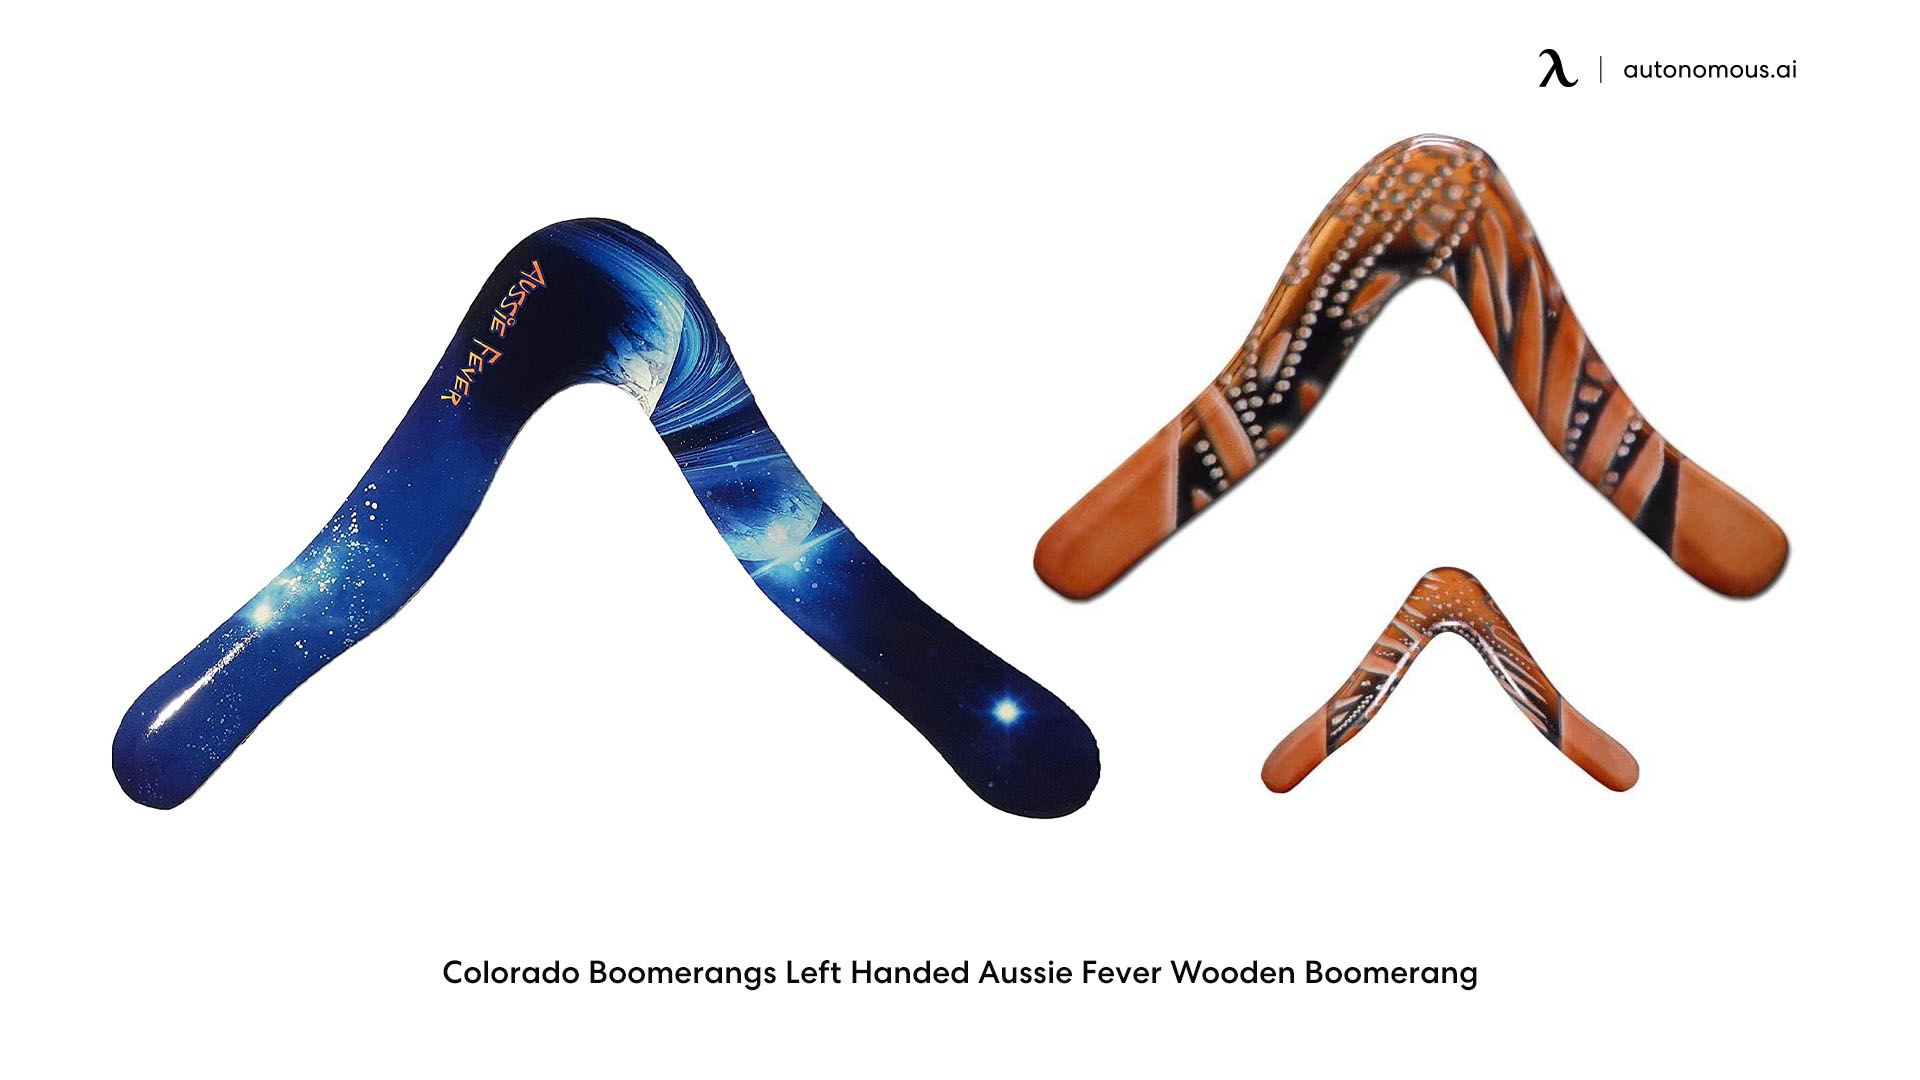 Left Handed Aussie Fever Wooden Boomerang